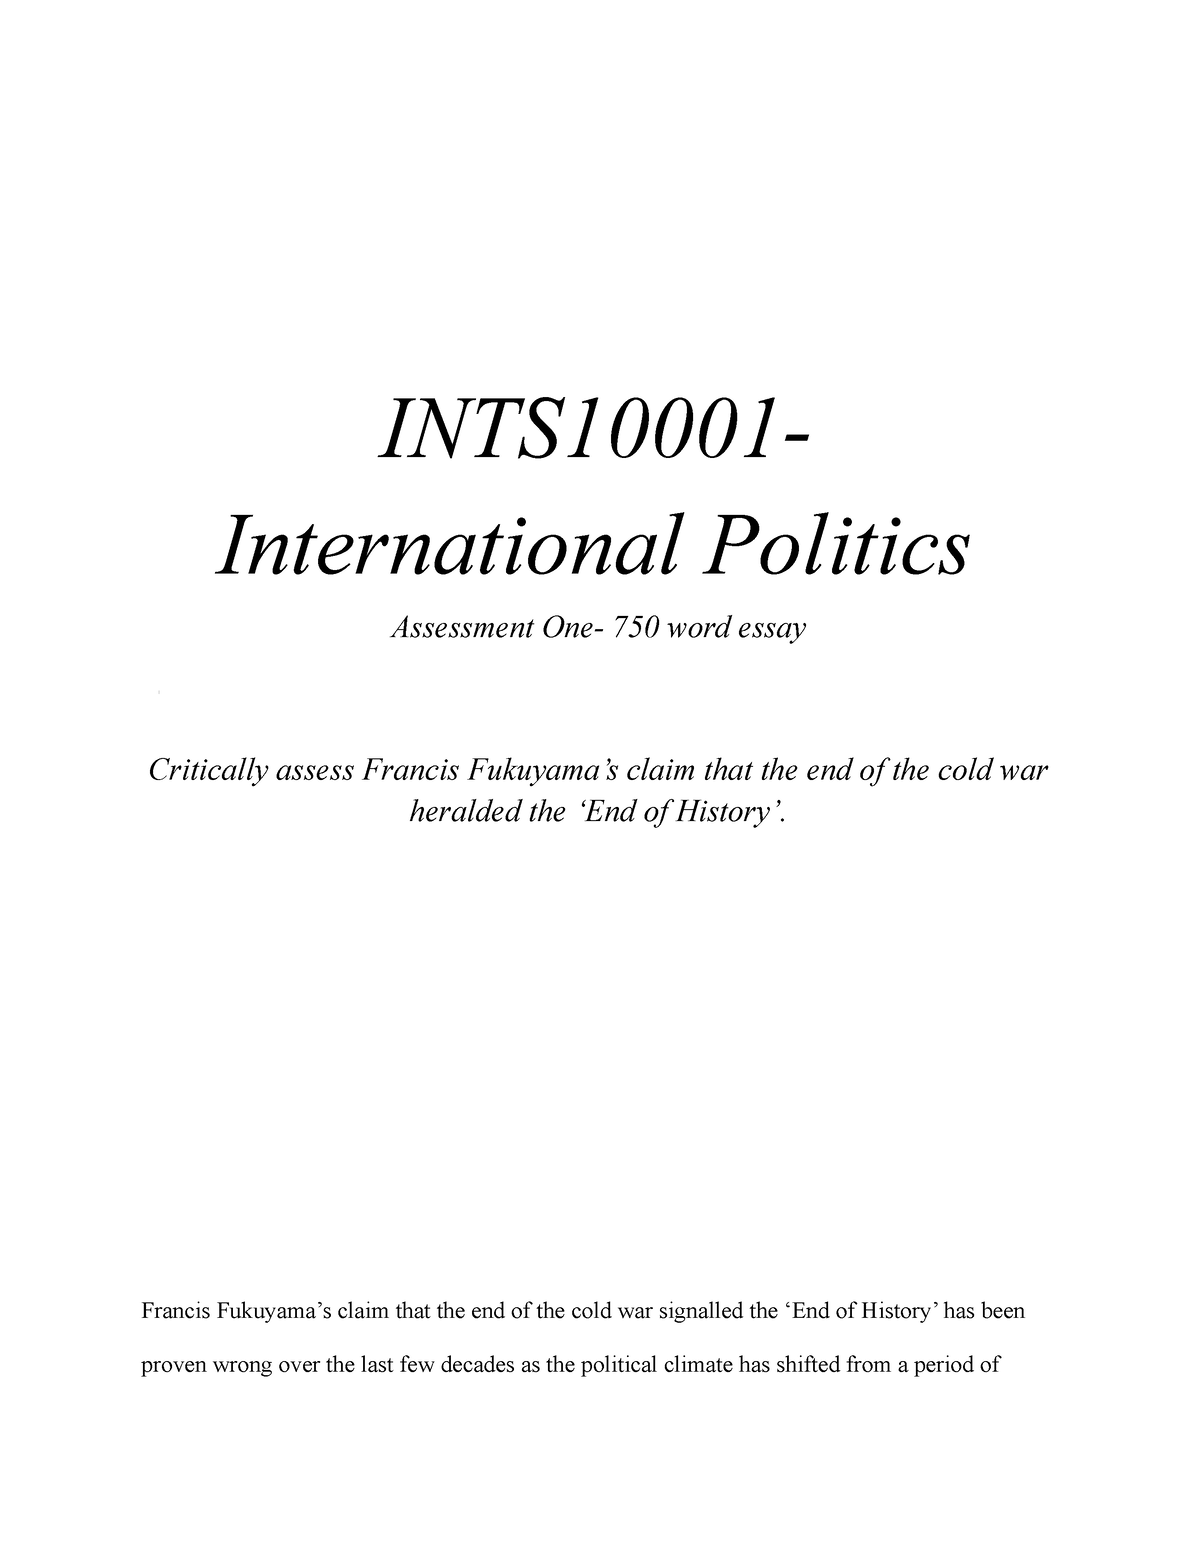 write various methodologies of international politics